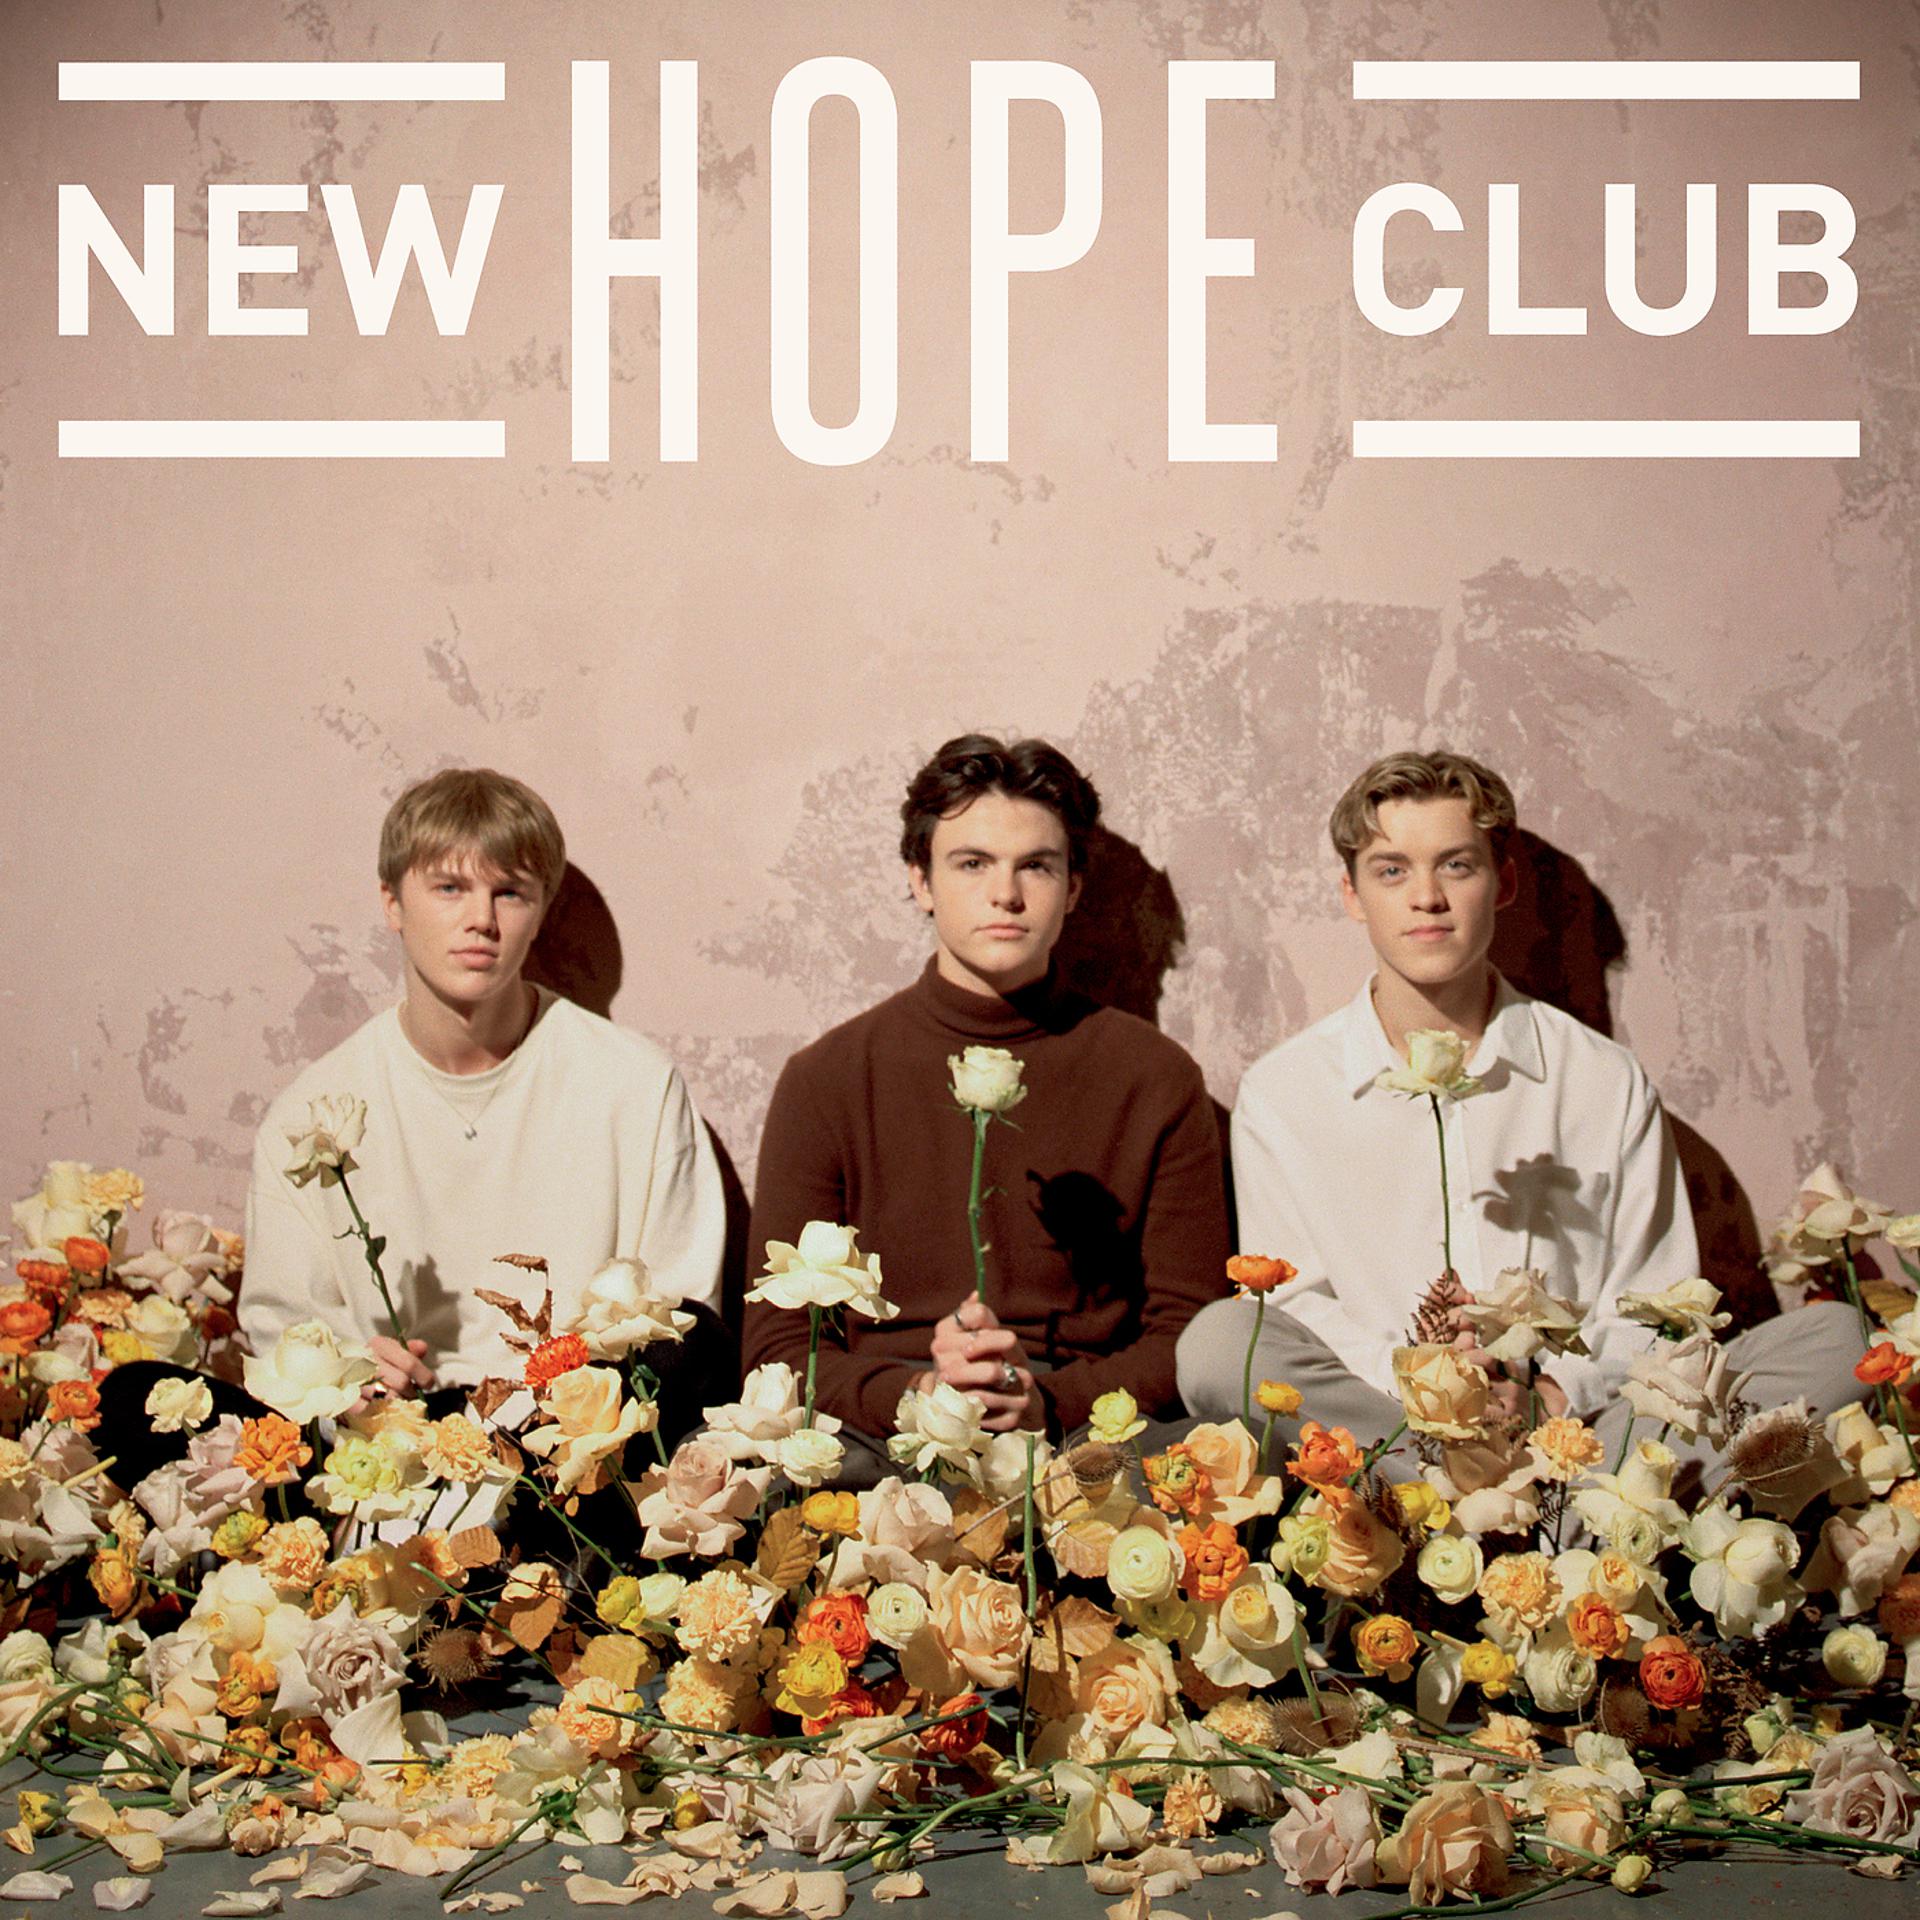 New Hope Club - фото